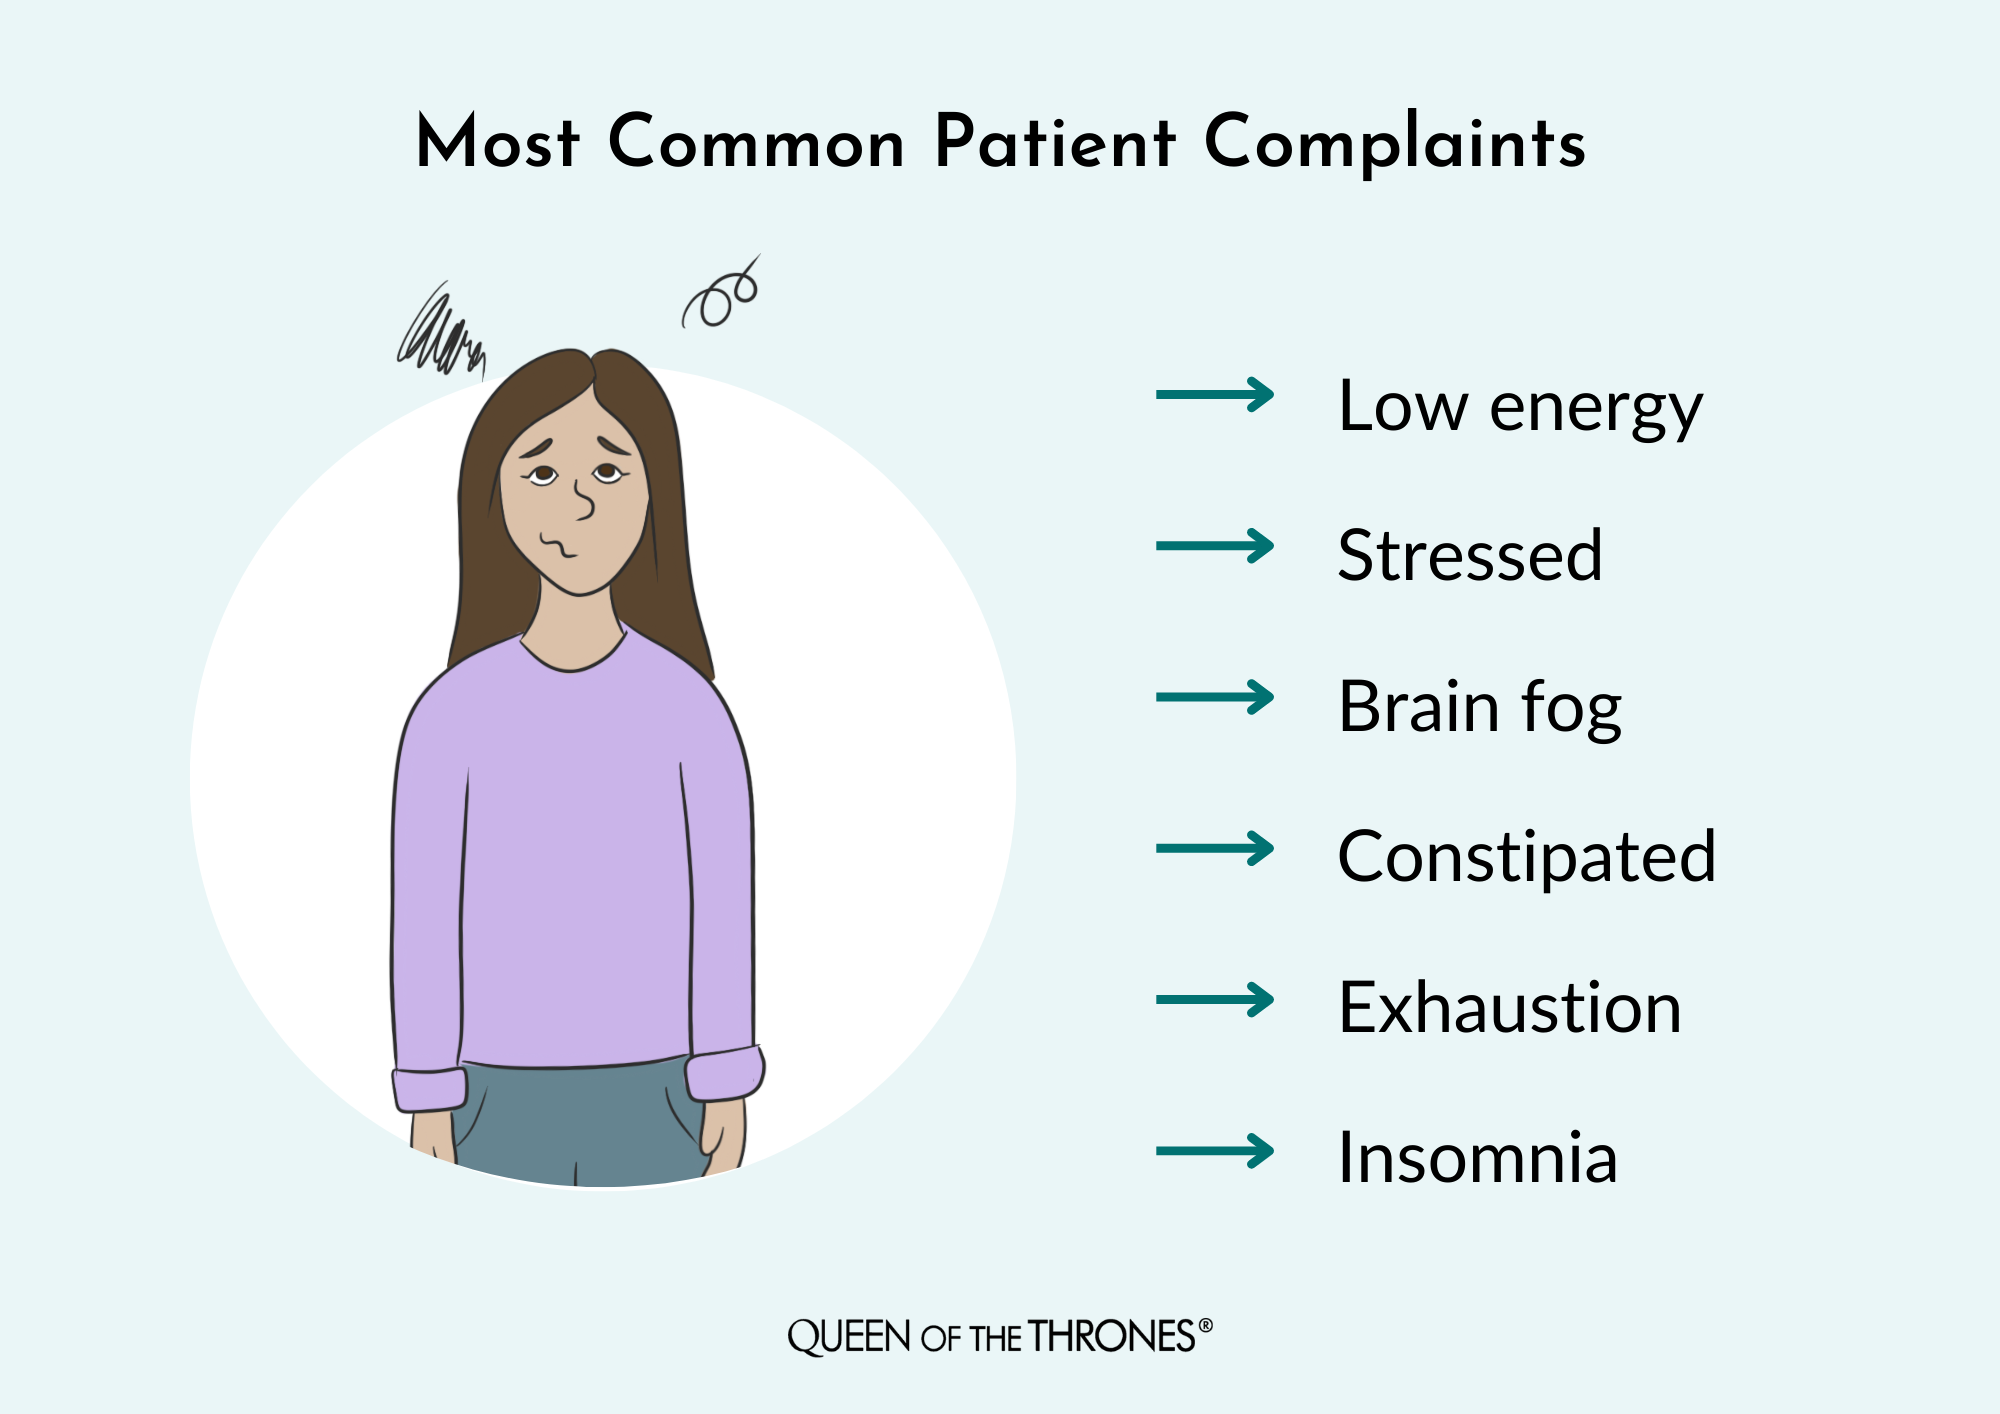 Common patient complaints by Queen of the Thrones